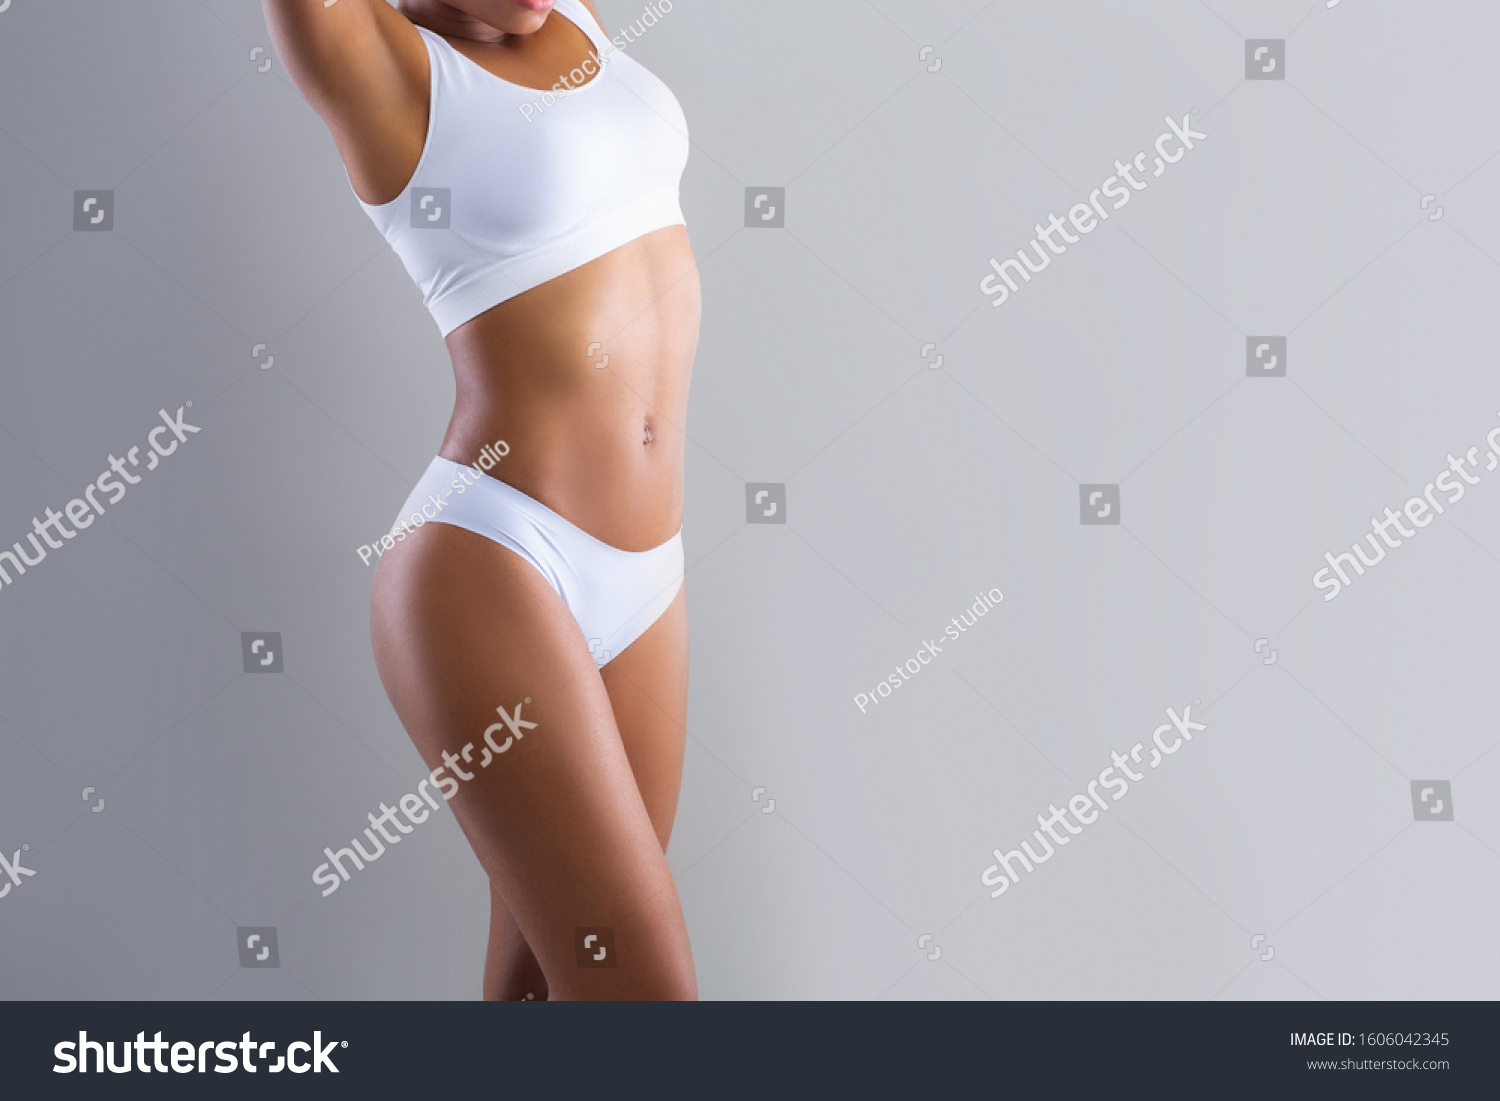 Showing her wonderful body